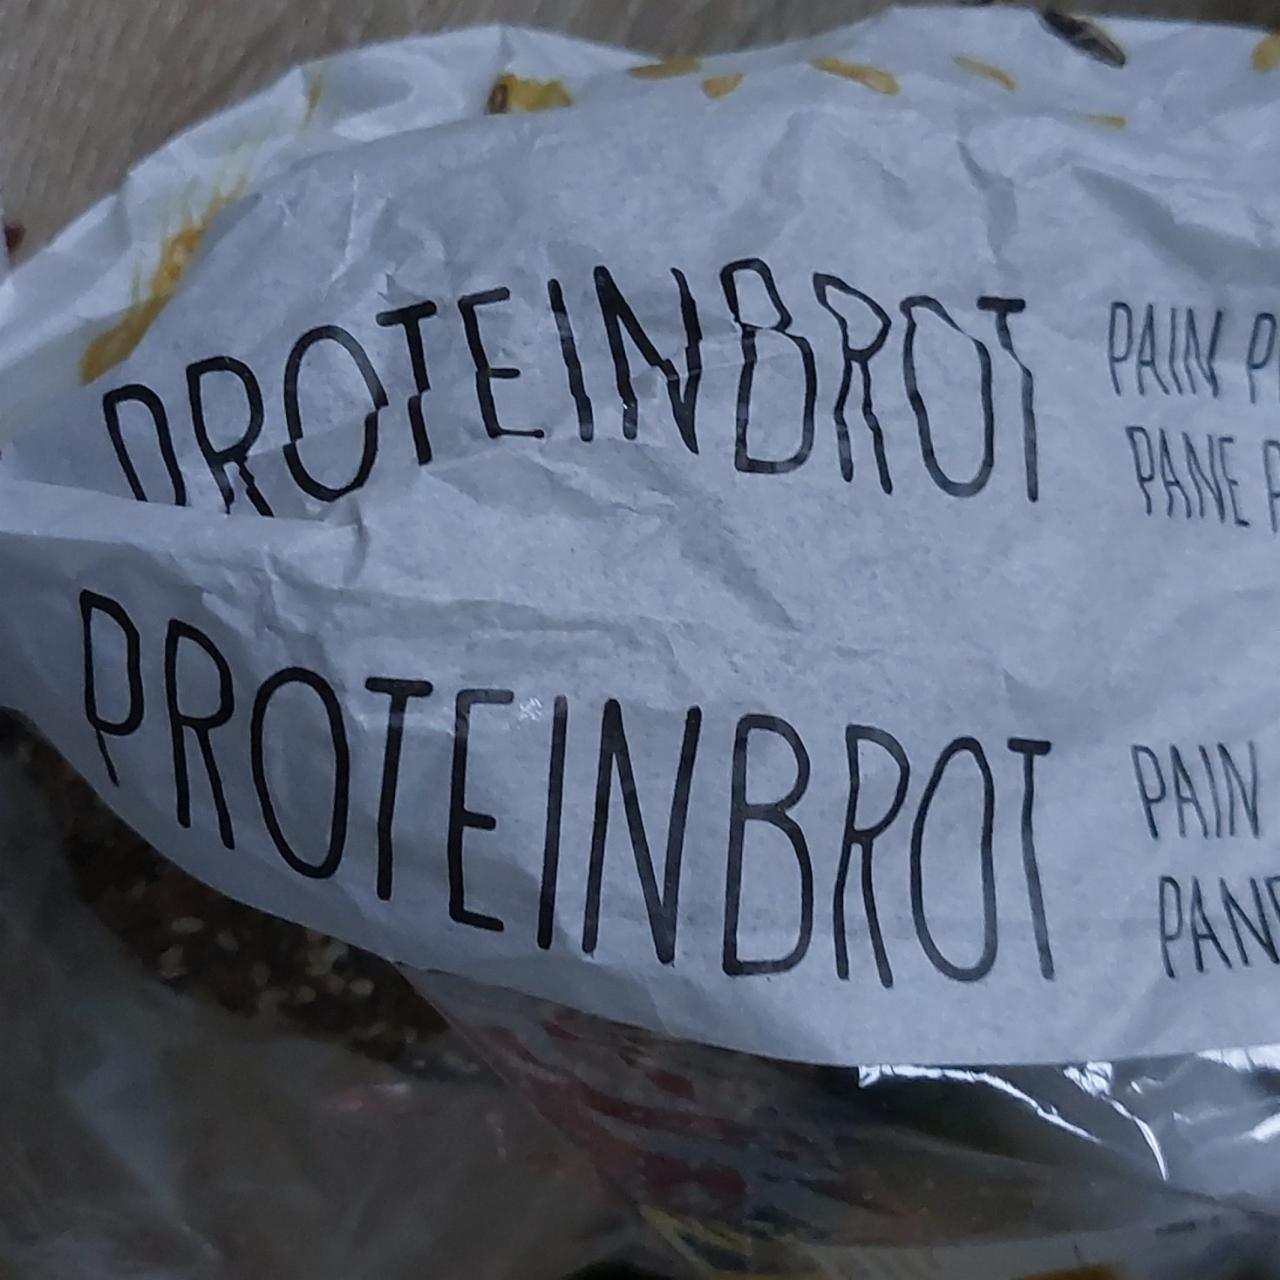 Fotografie - Protein Brot You